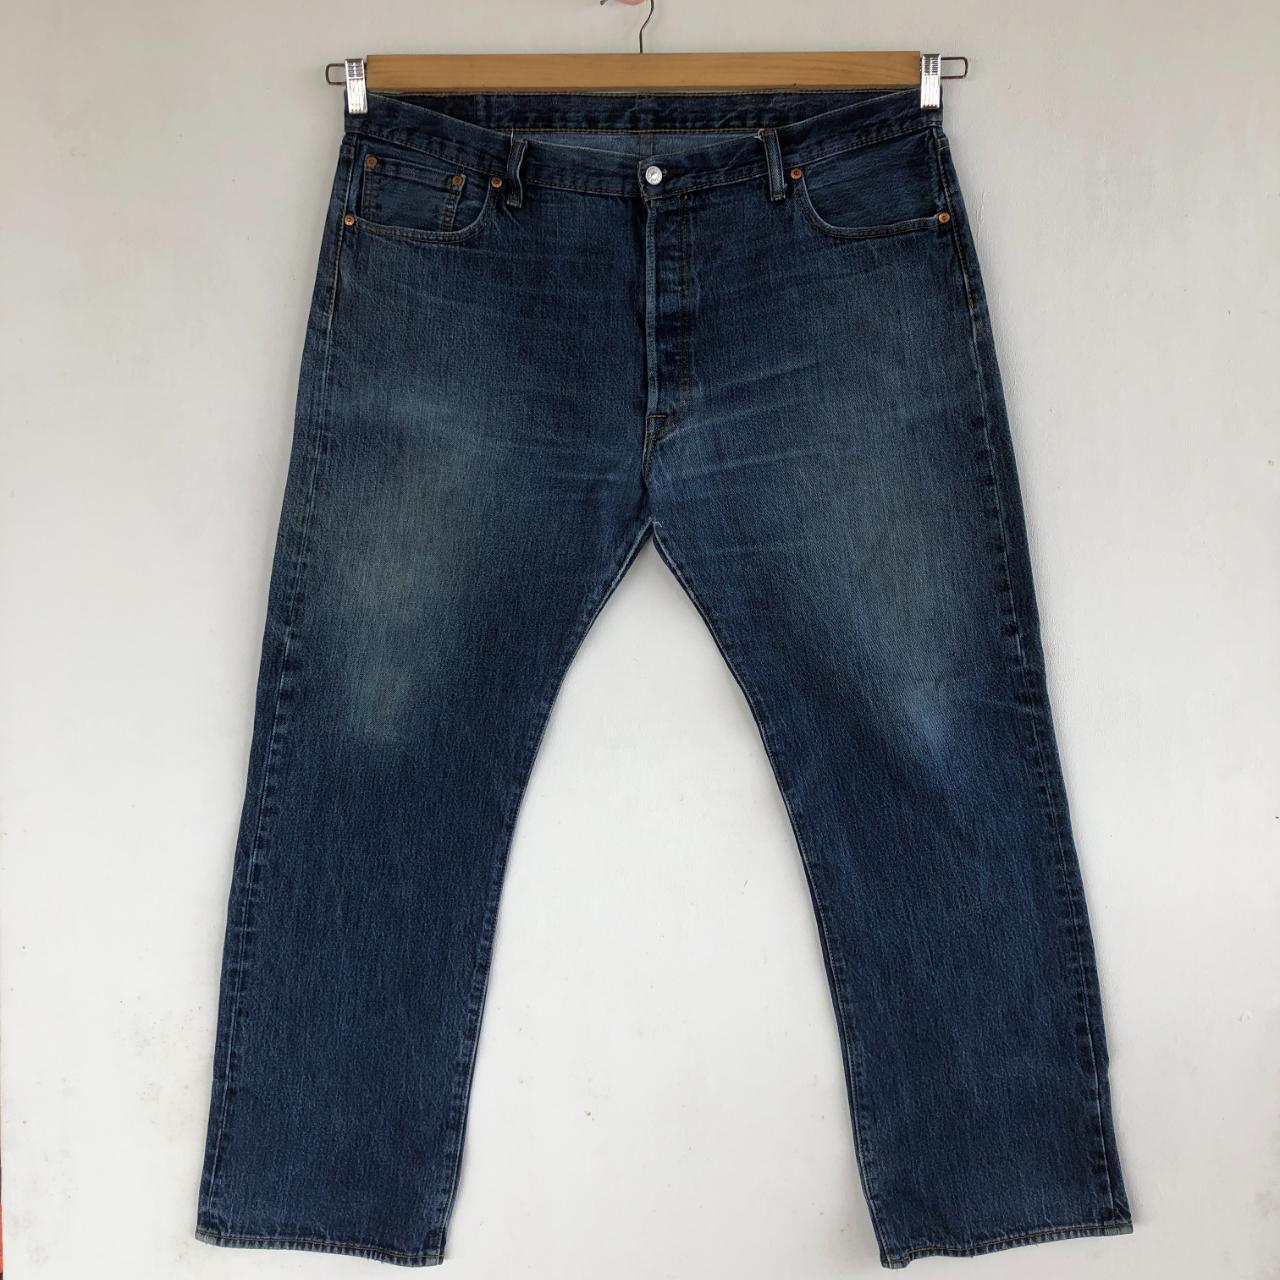 Vintage Levis 501 Jeans Levis 501 Denim... - Depop